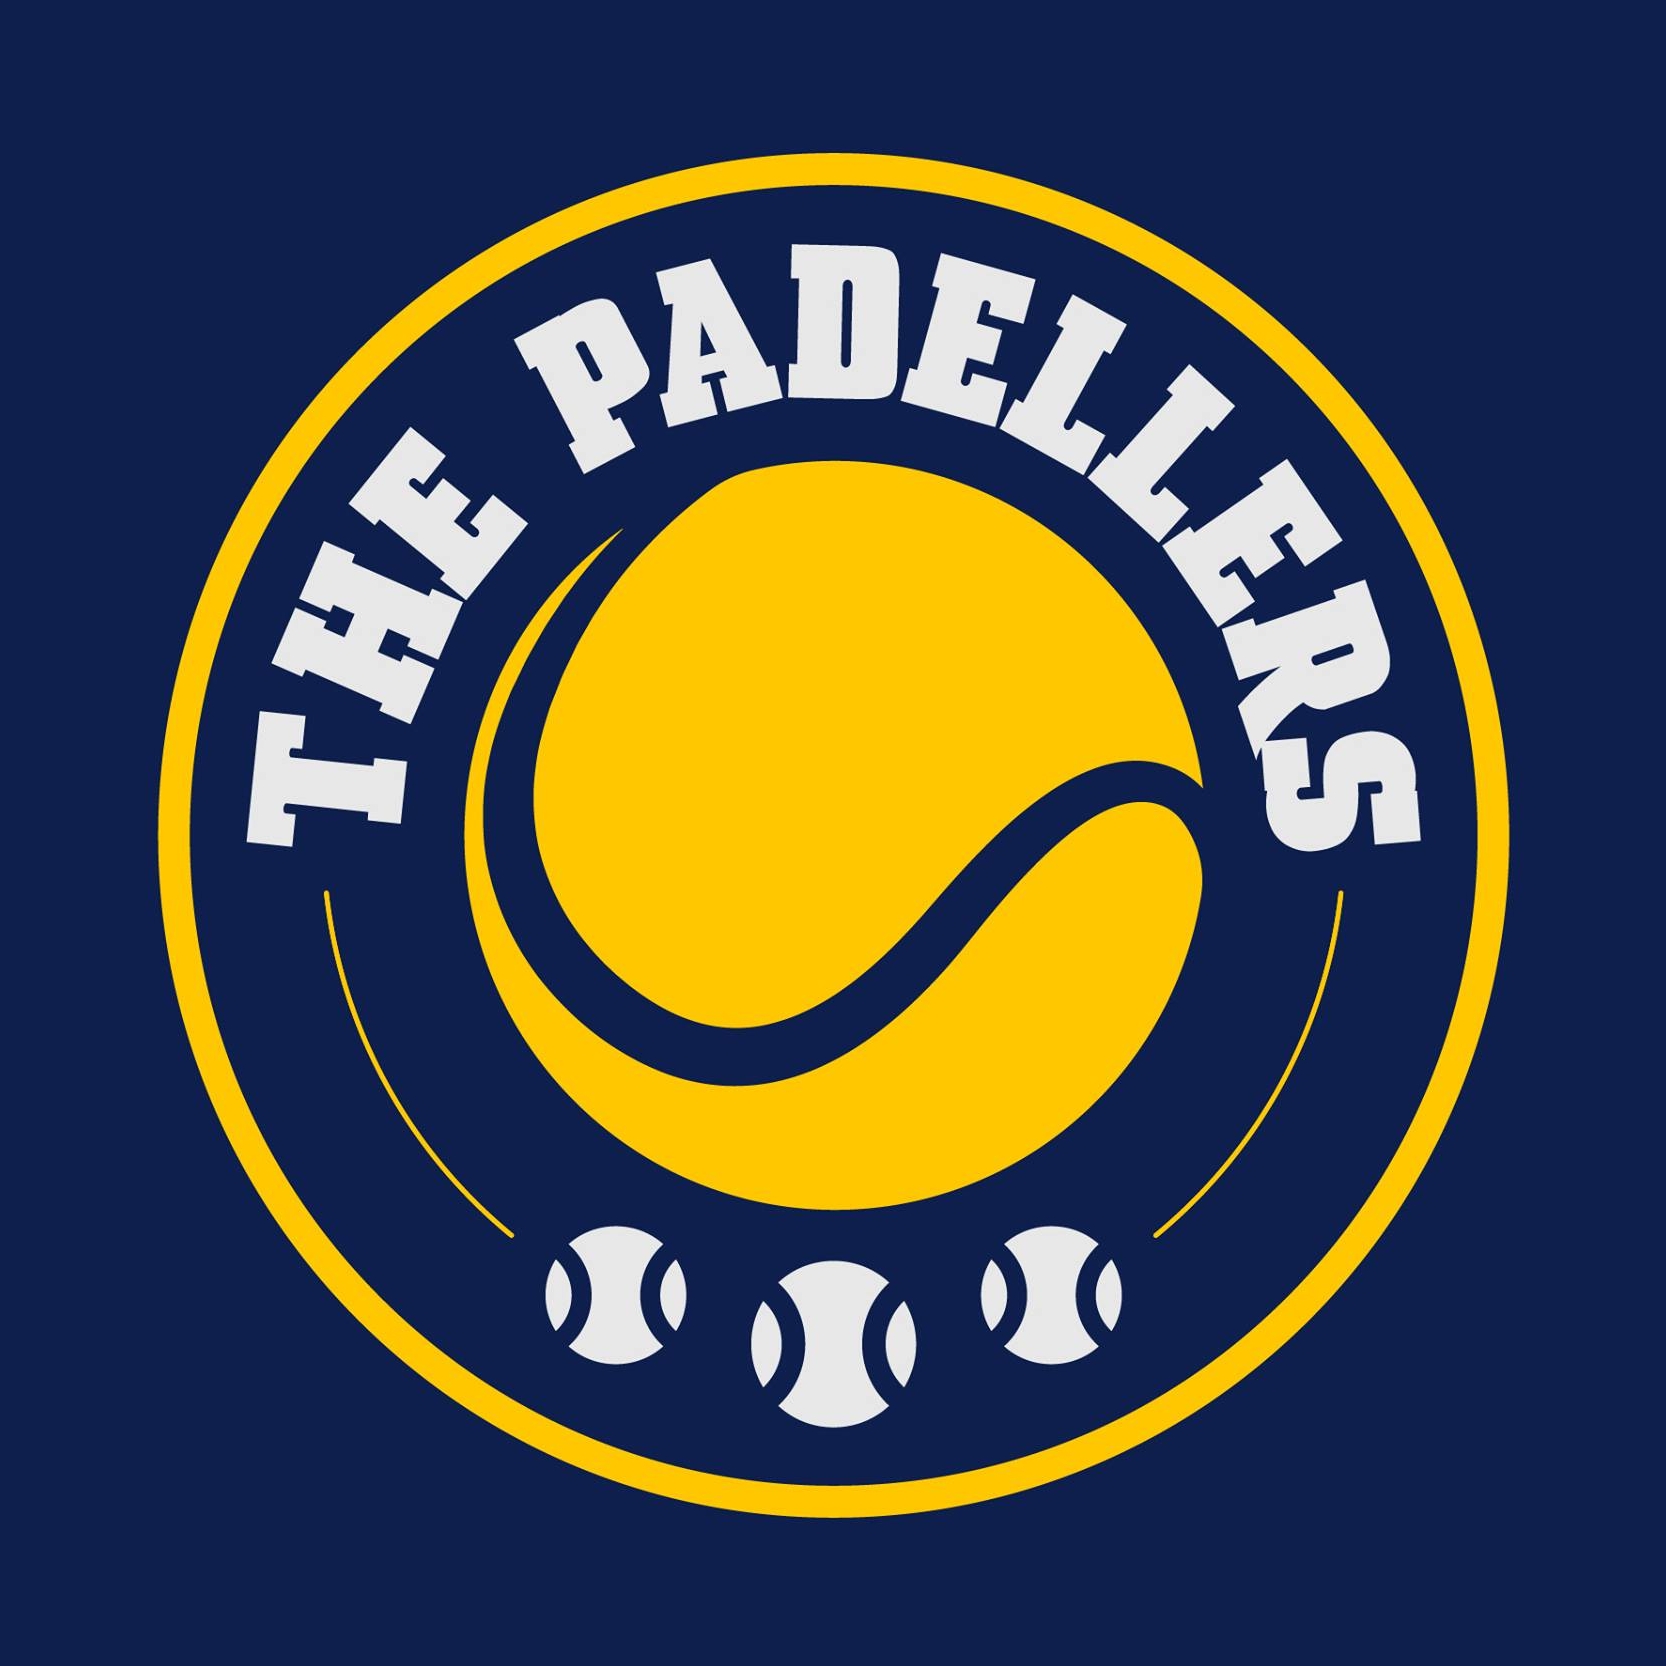 Profile image of venue The Padellers - Bergen op Zoom